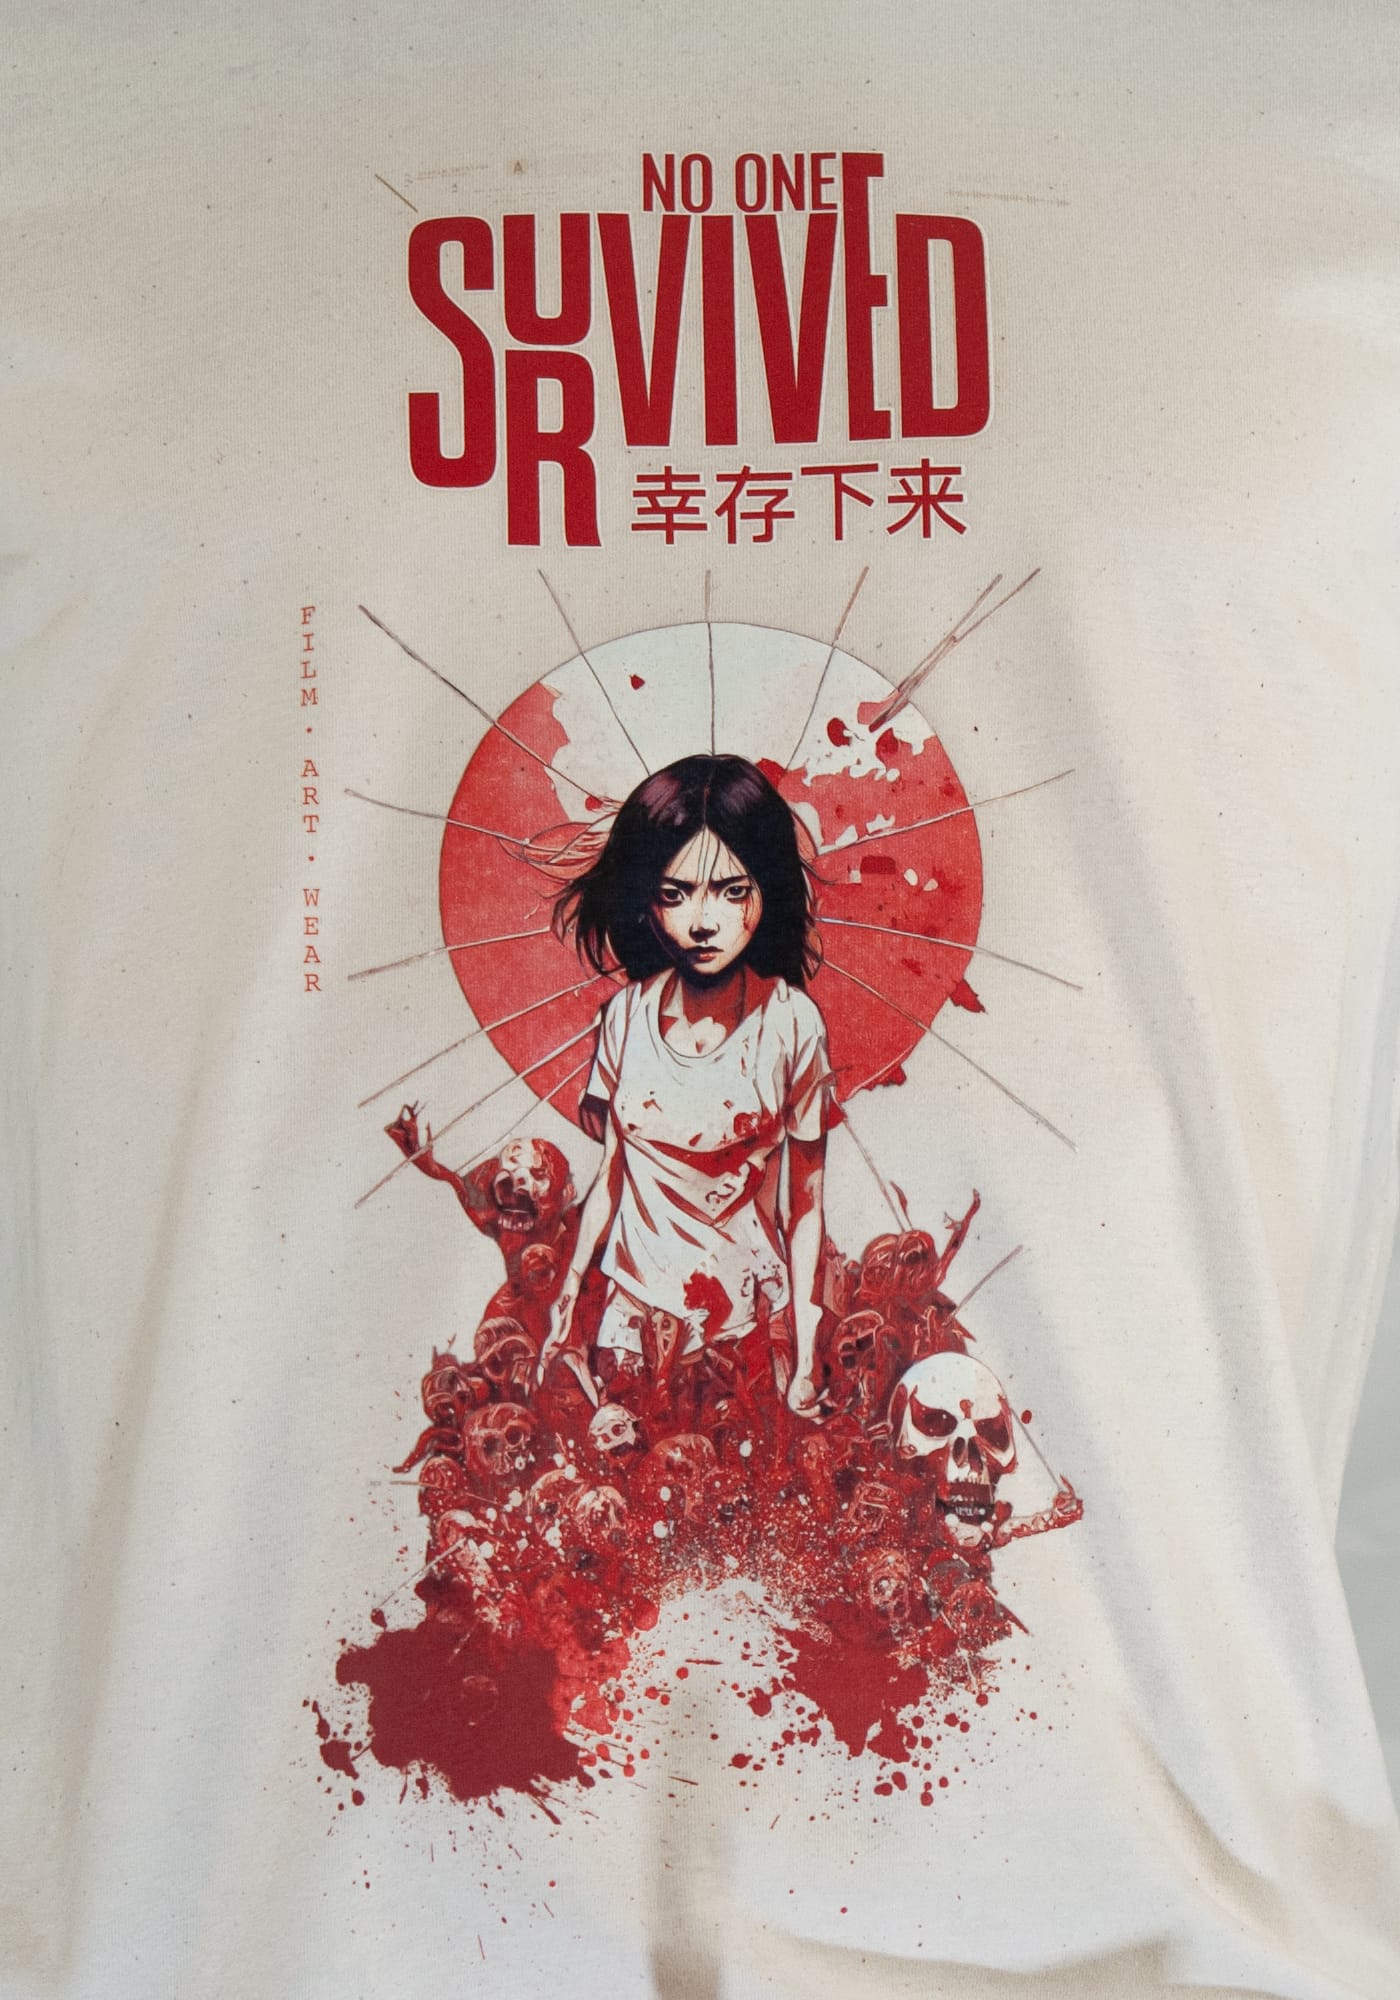 manga-shirt-nahaufnahme-japansiche-heldin-zombies